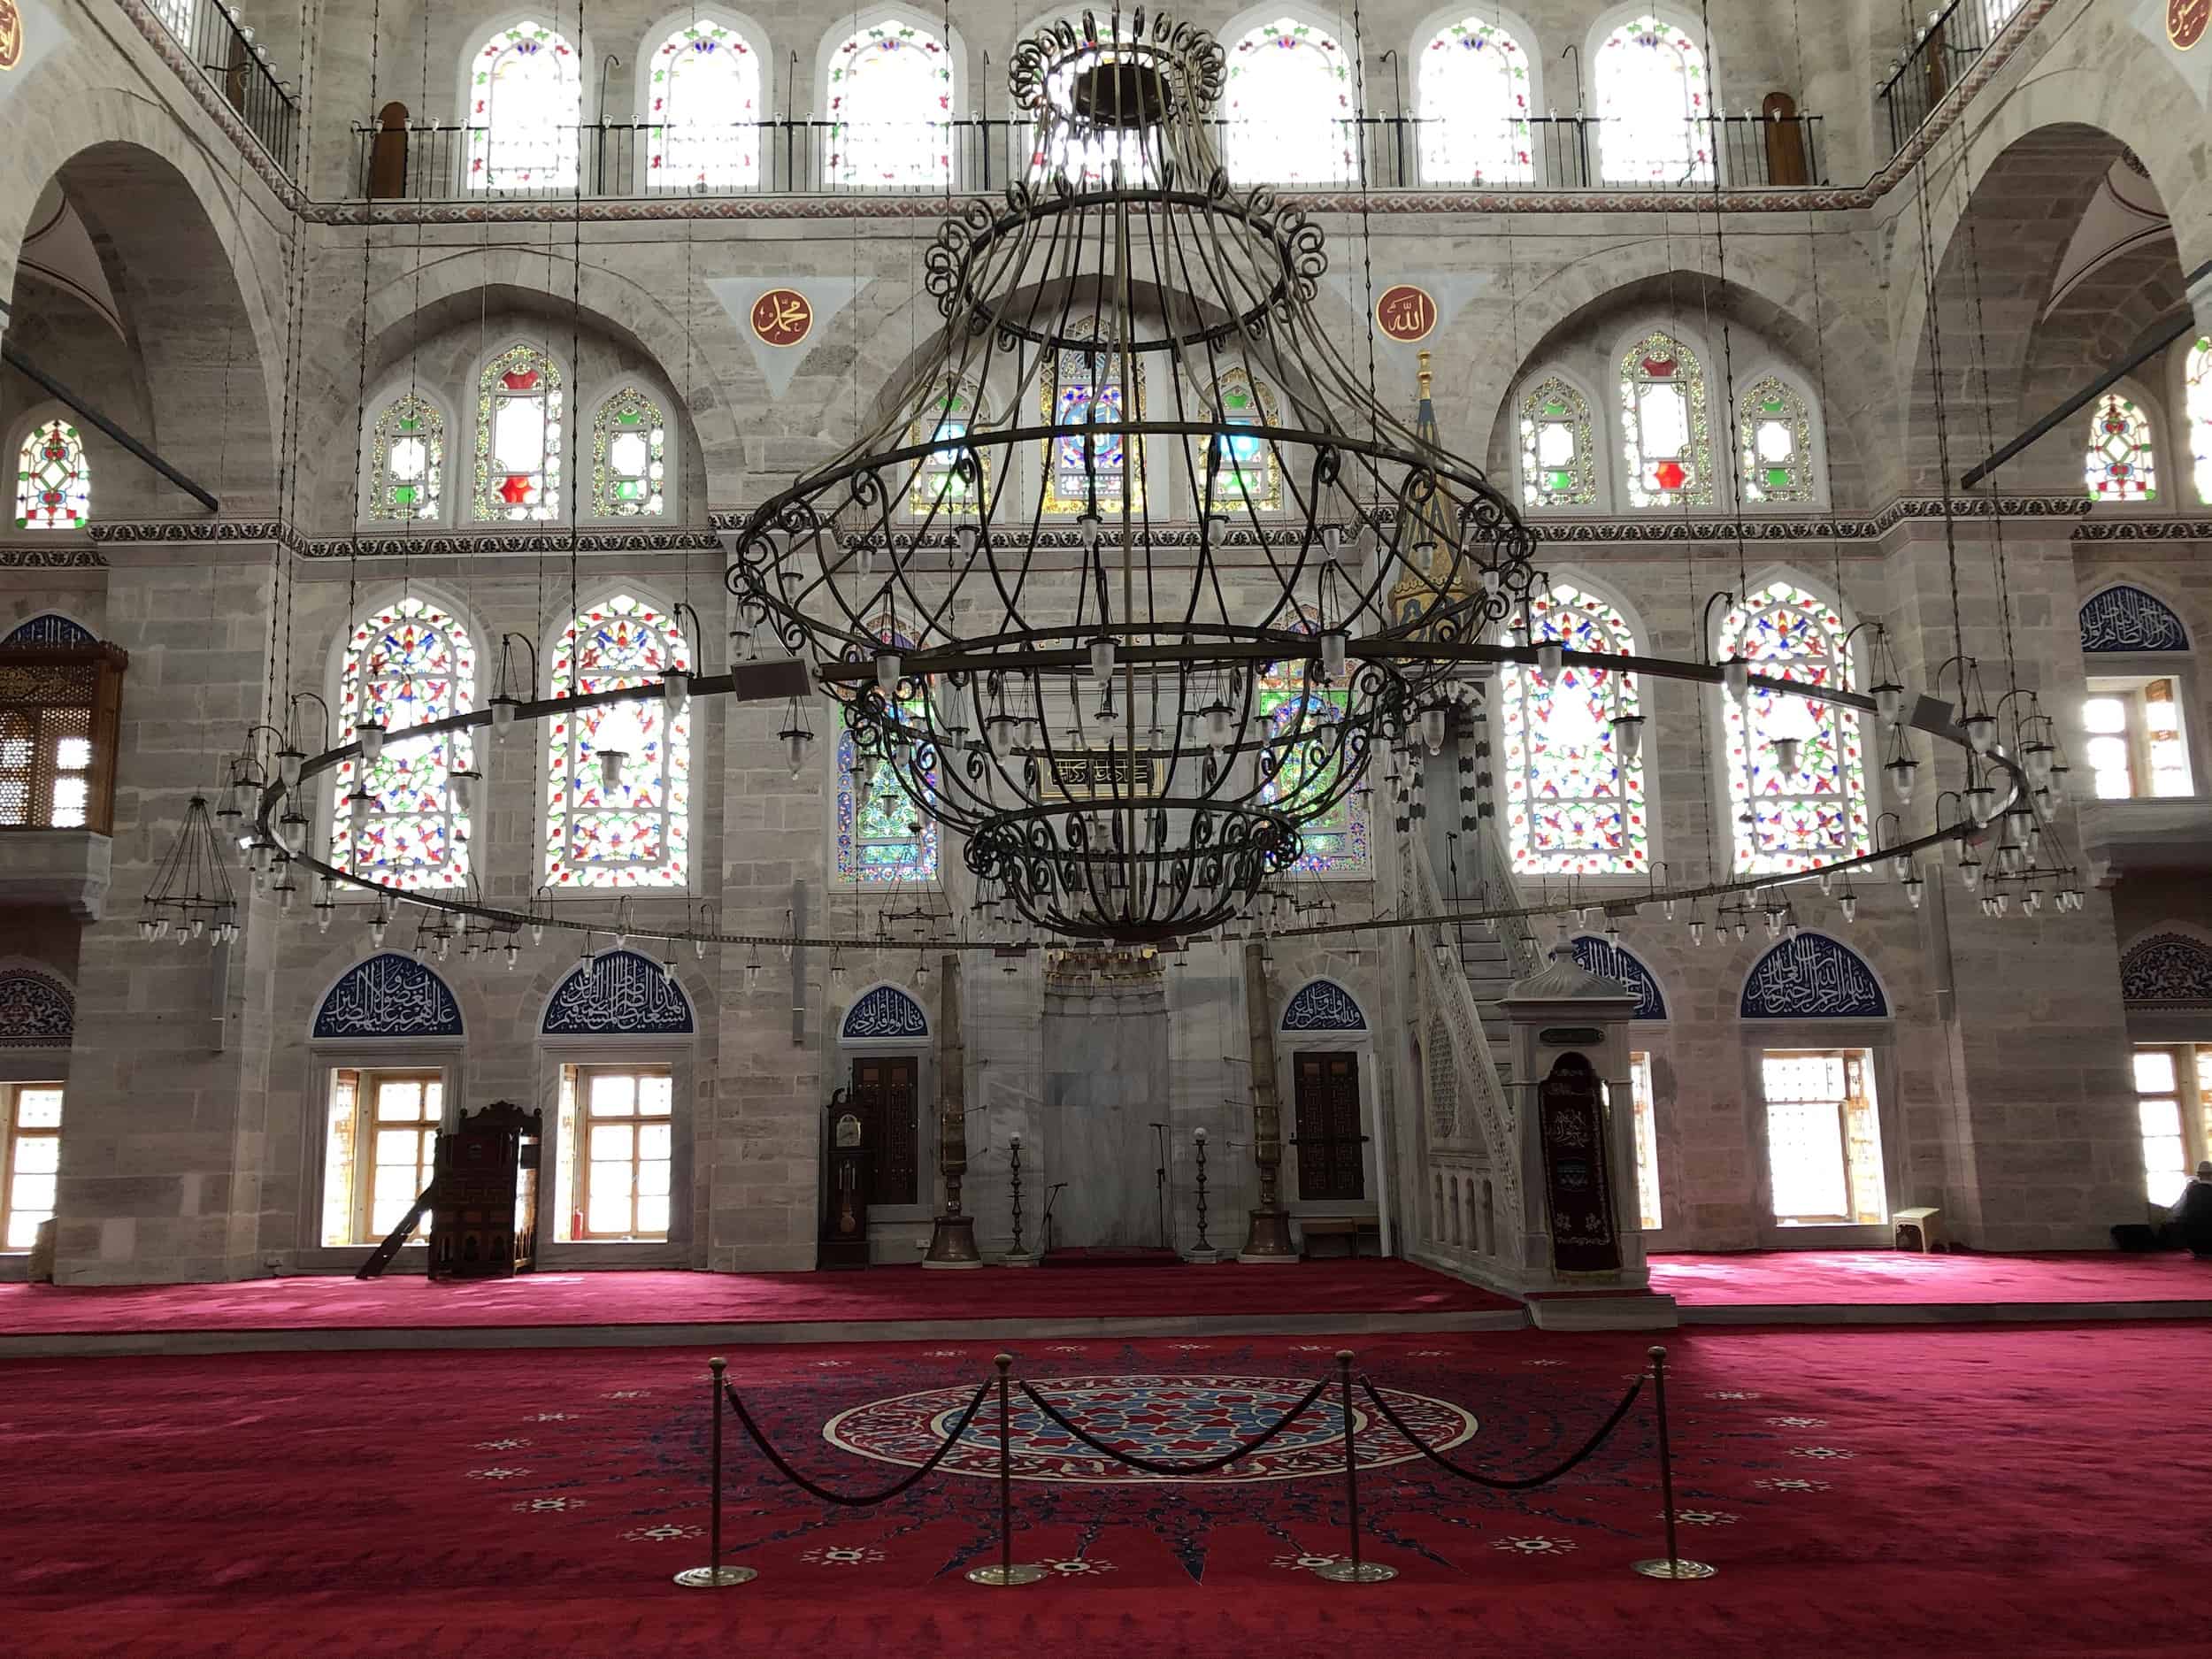 Prayer hall at the Mihrimah Sultan Mosque in Edirnekapı, Istanbul, Turkey